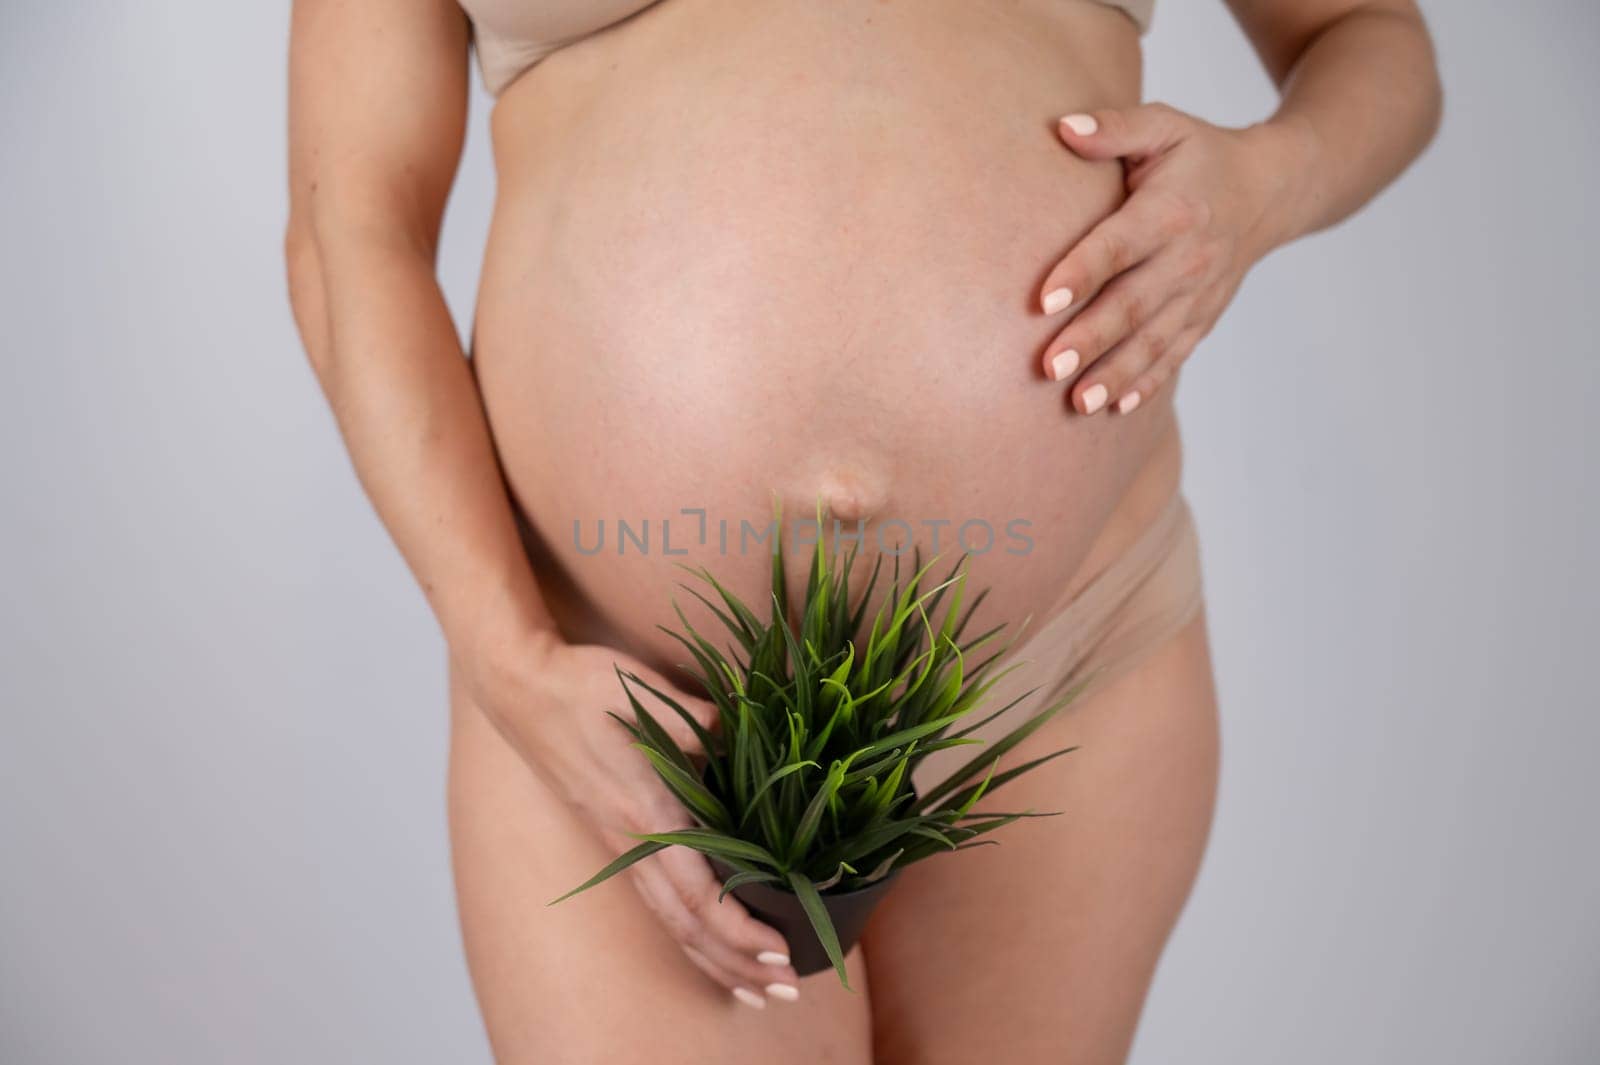 Faceless pregnant woman holding a plant. Metaphor for epilation of the bikini area